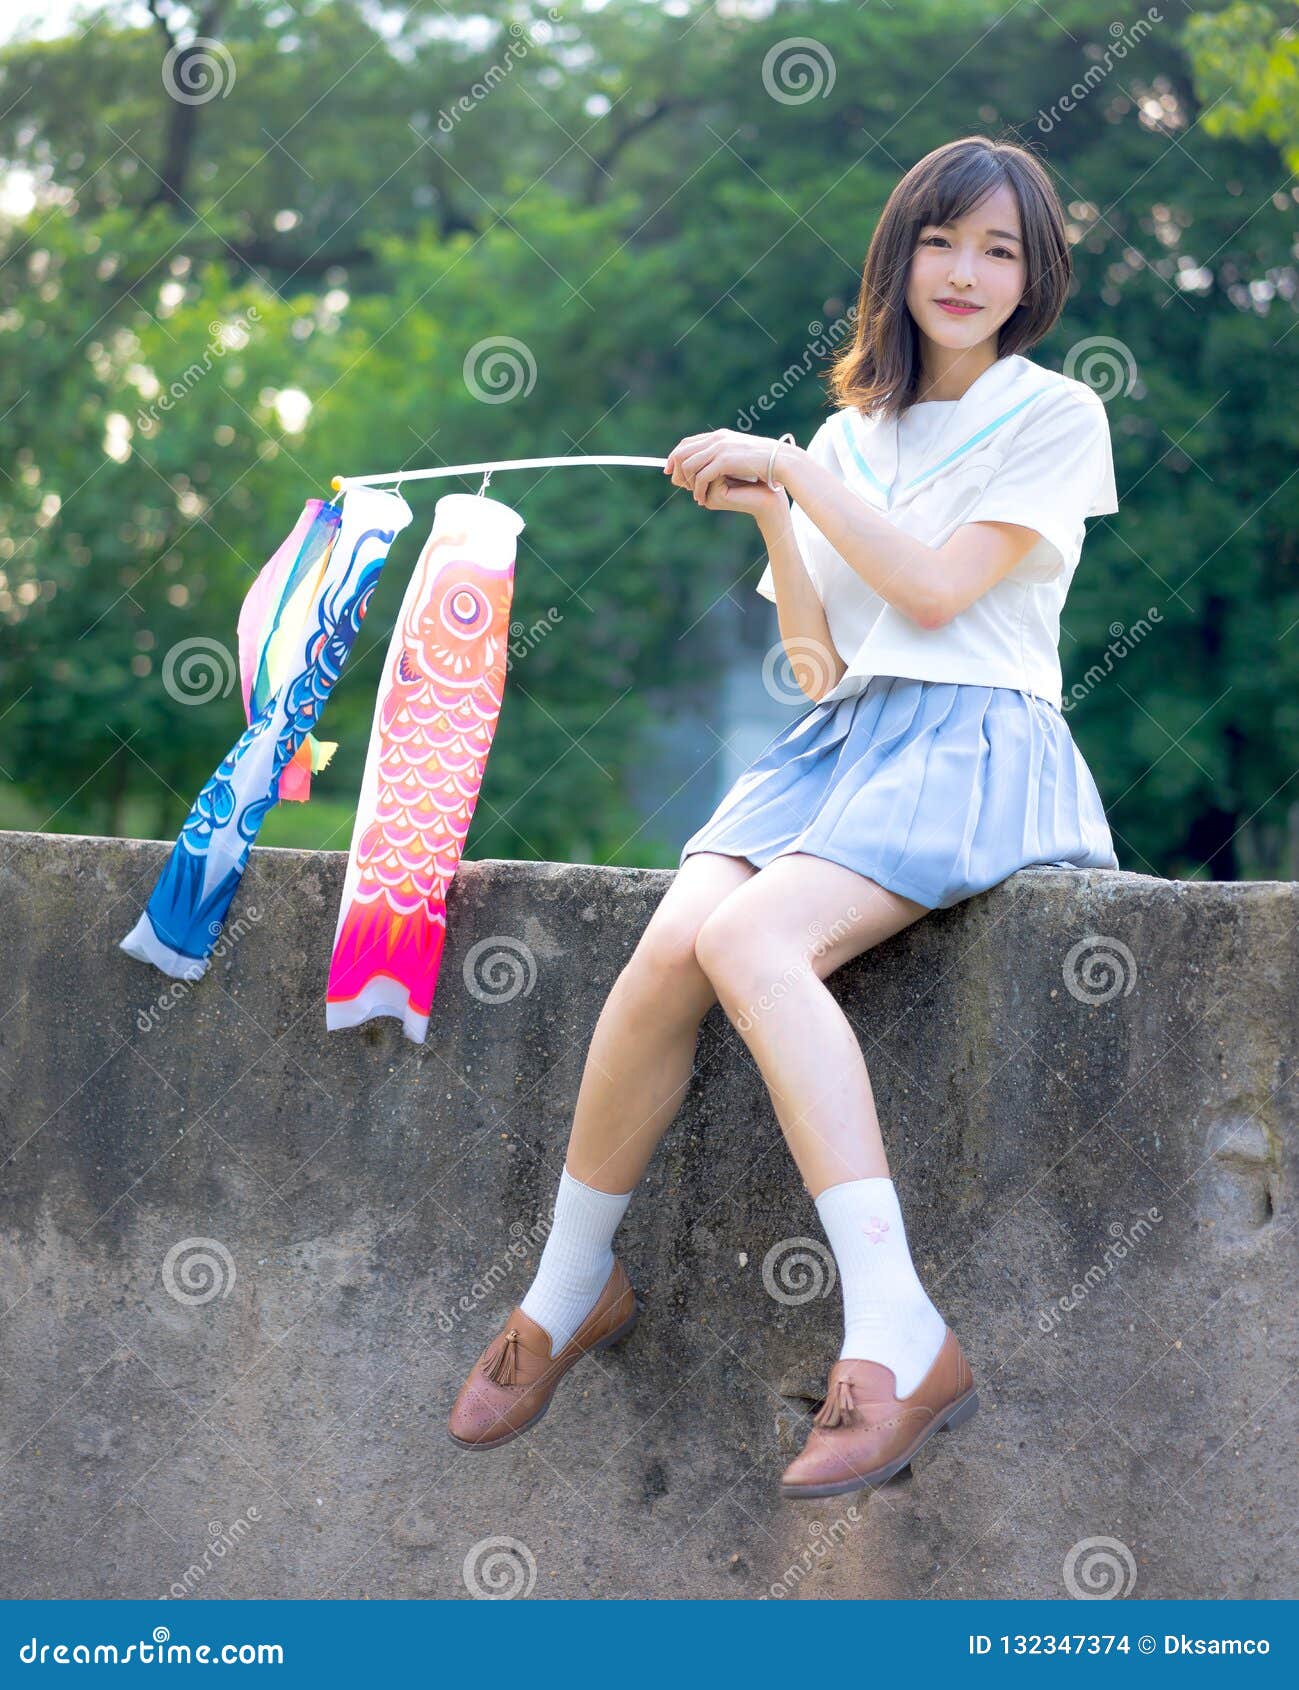 outdoor Asian uniform chicktrainer